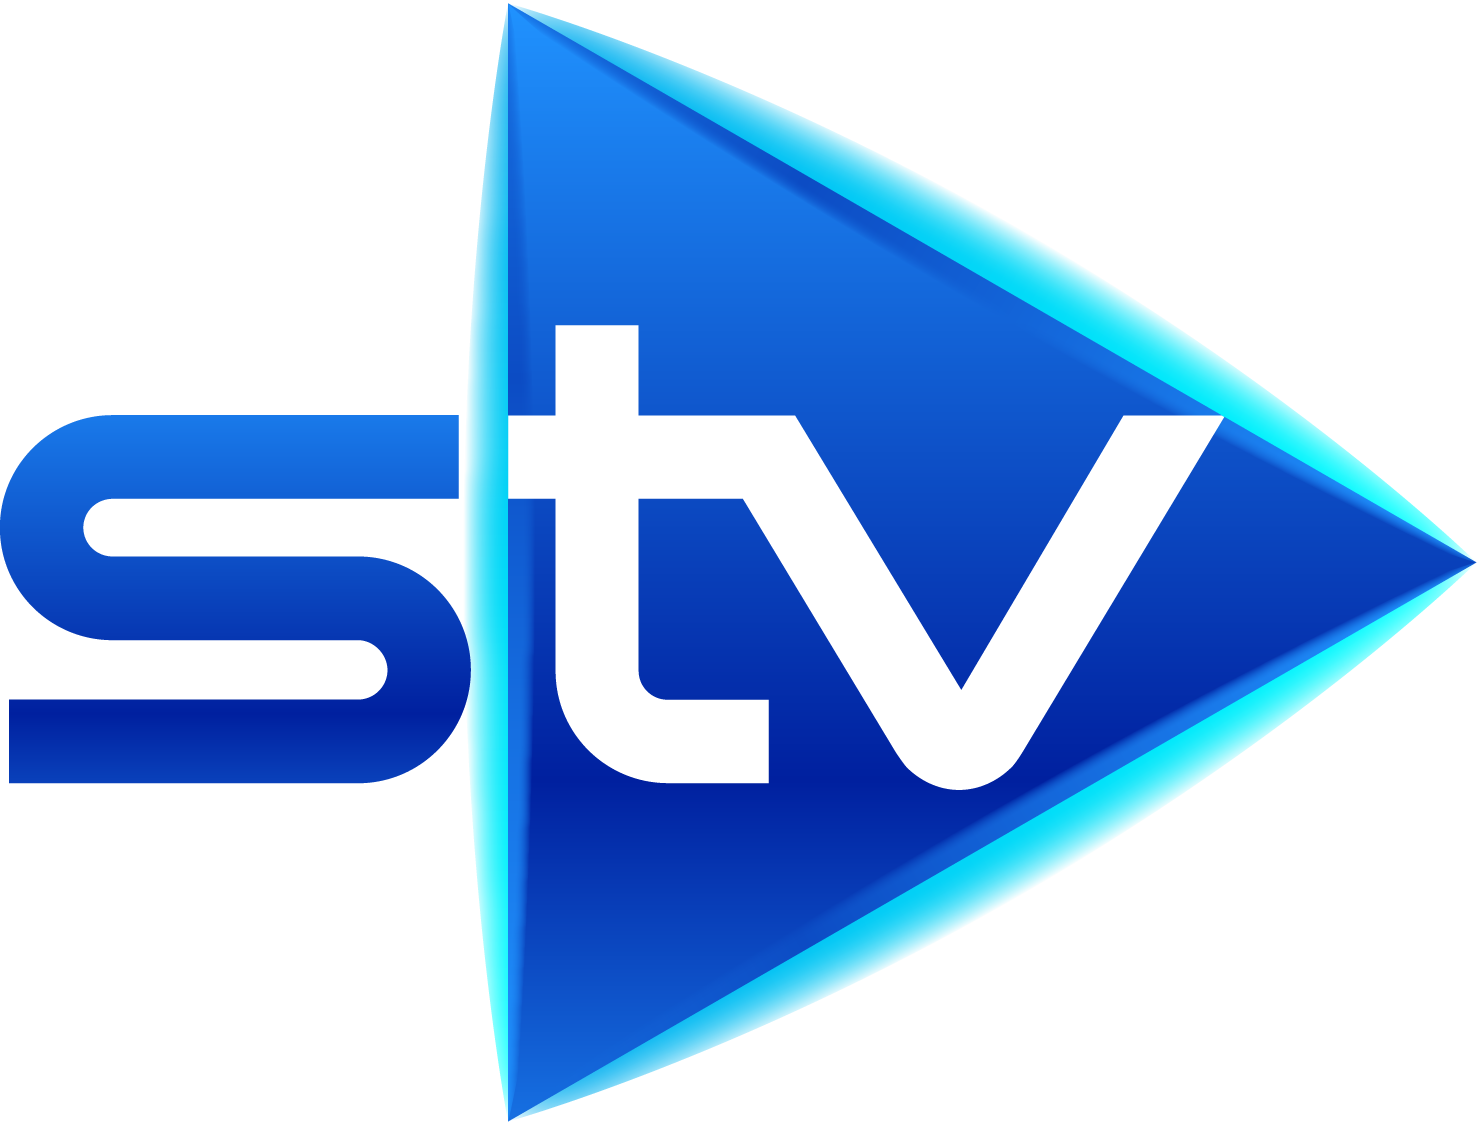 STV_logo_2014.png